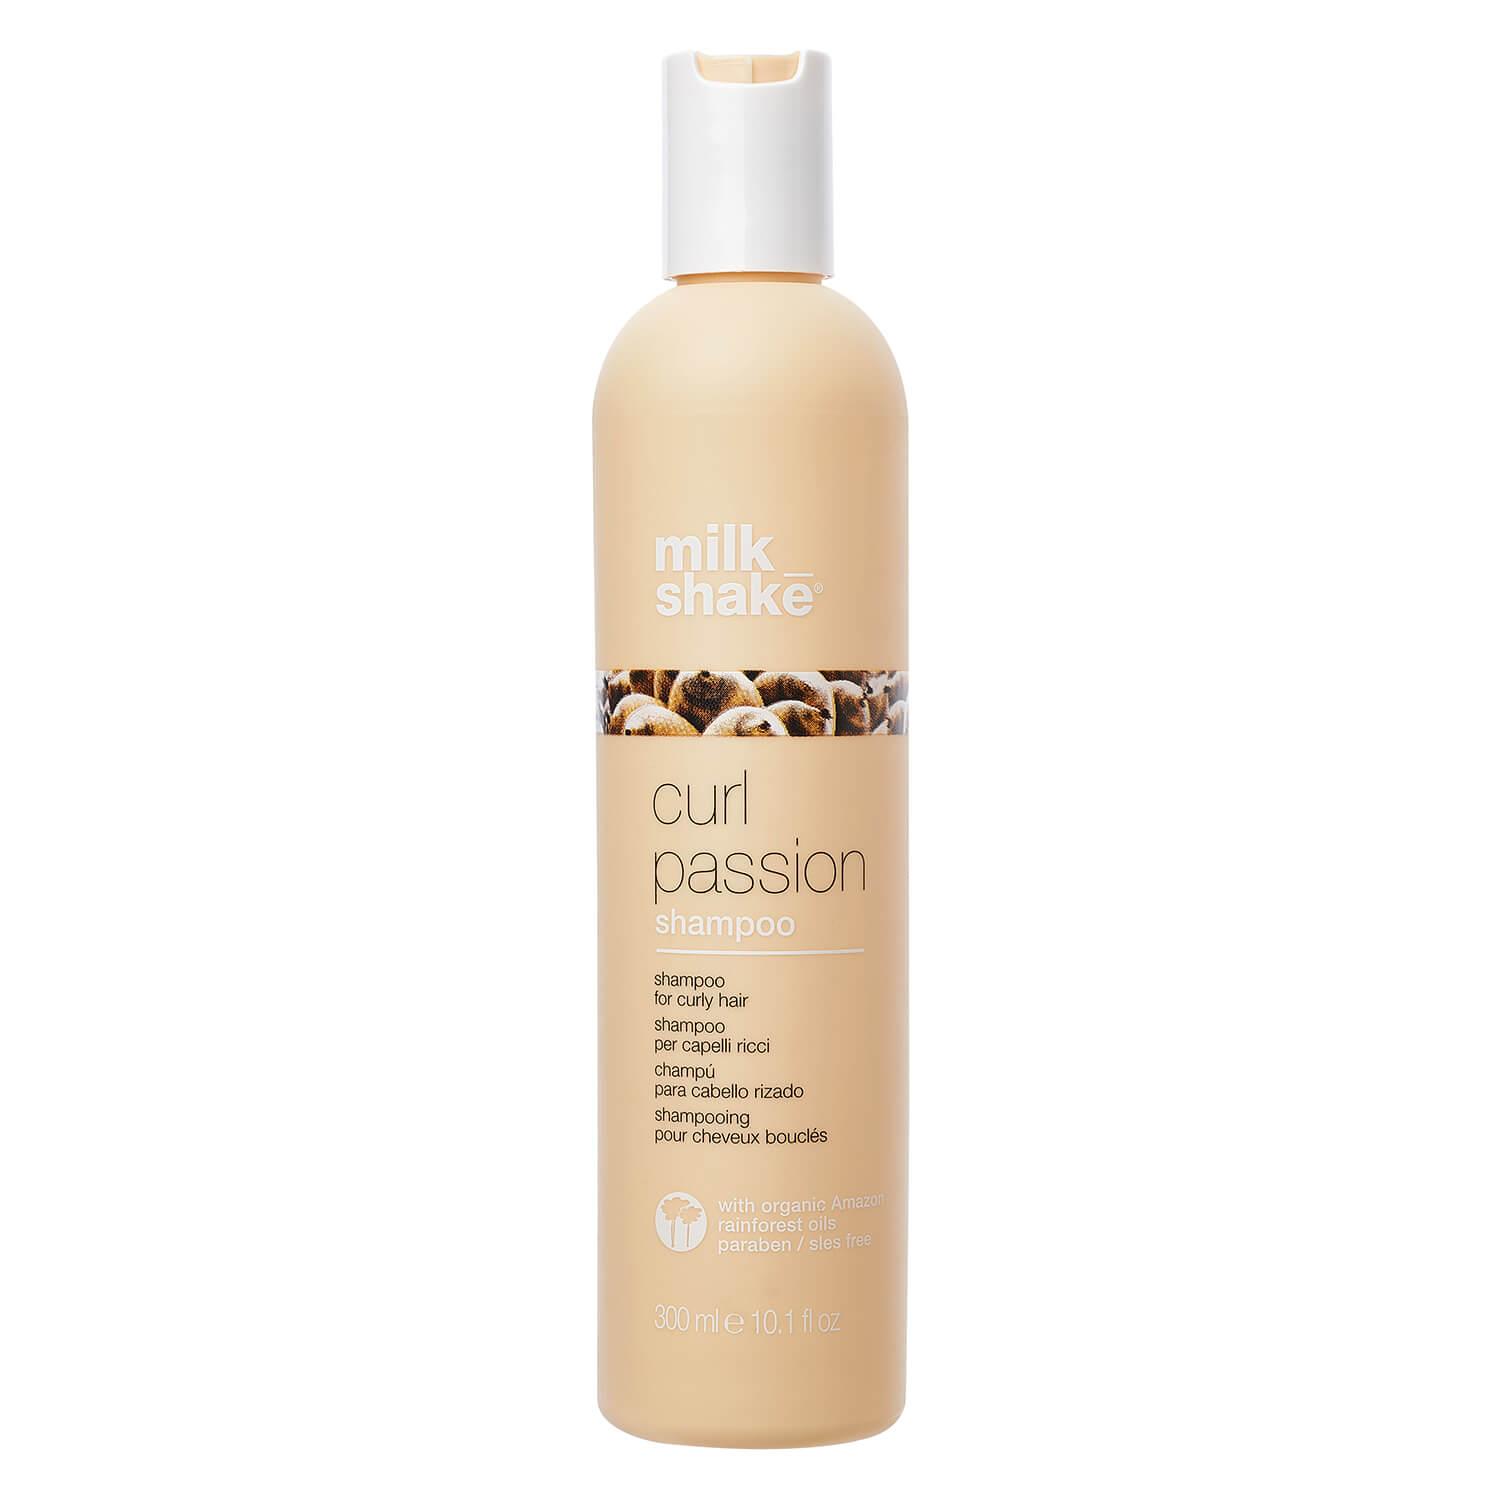 milk_shake curl passion - shampoo